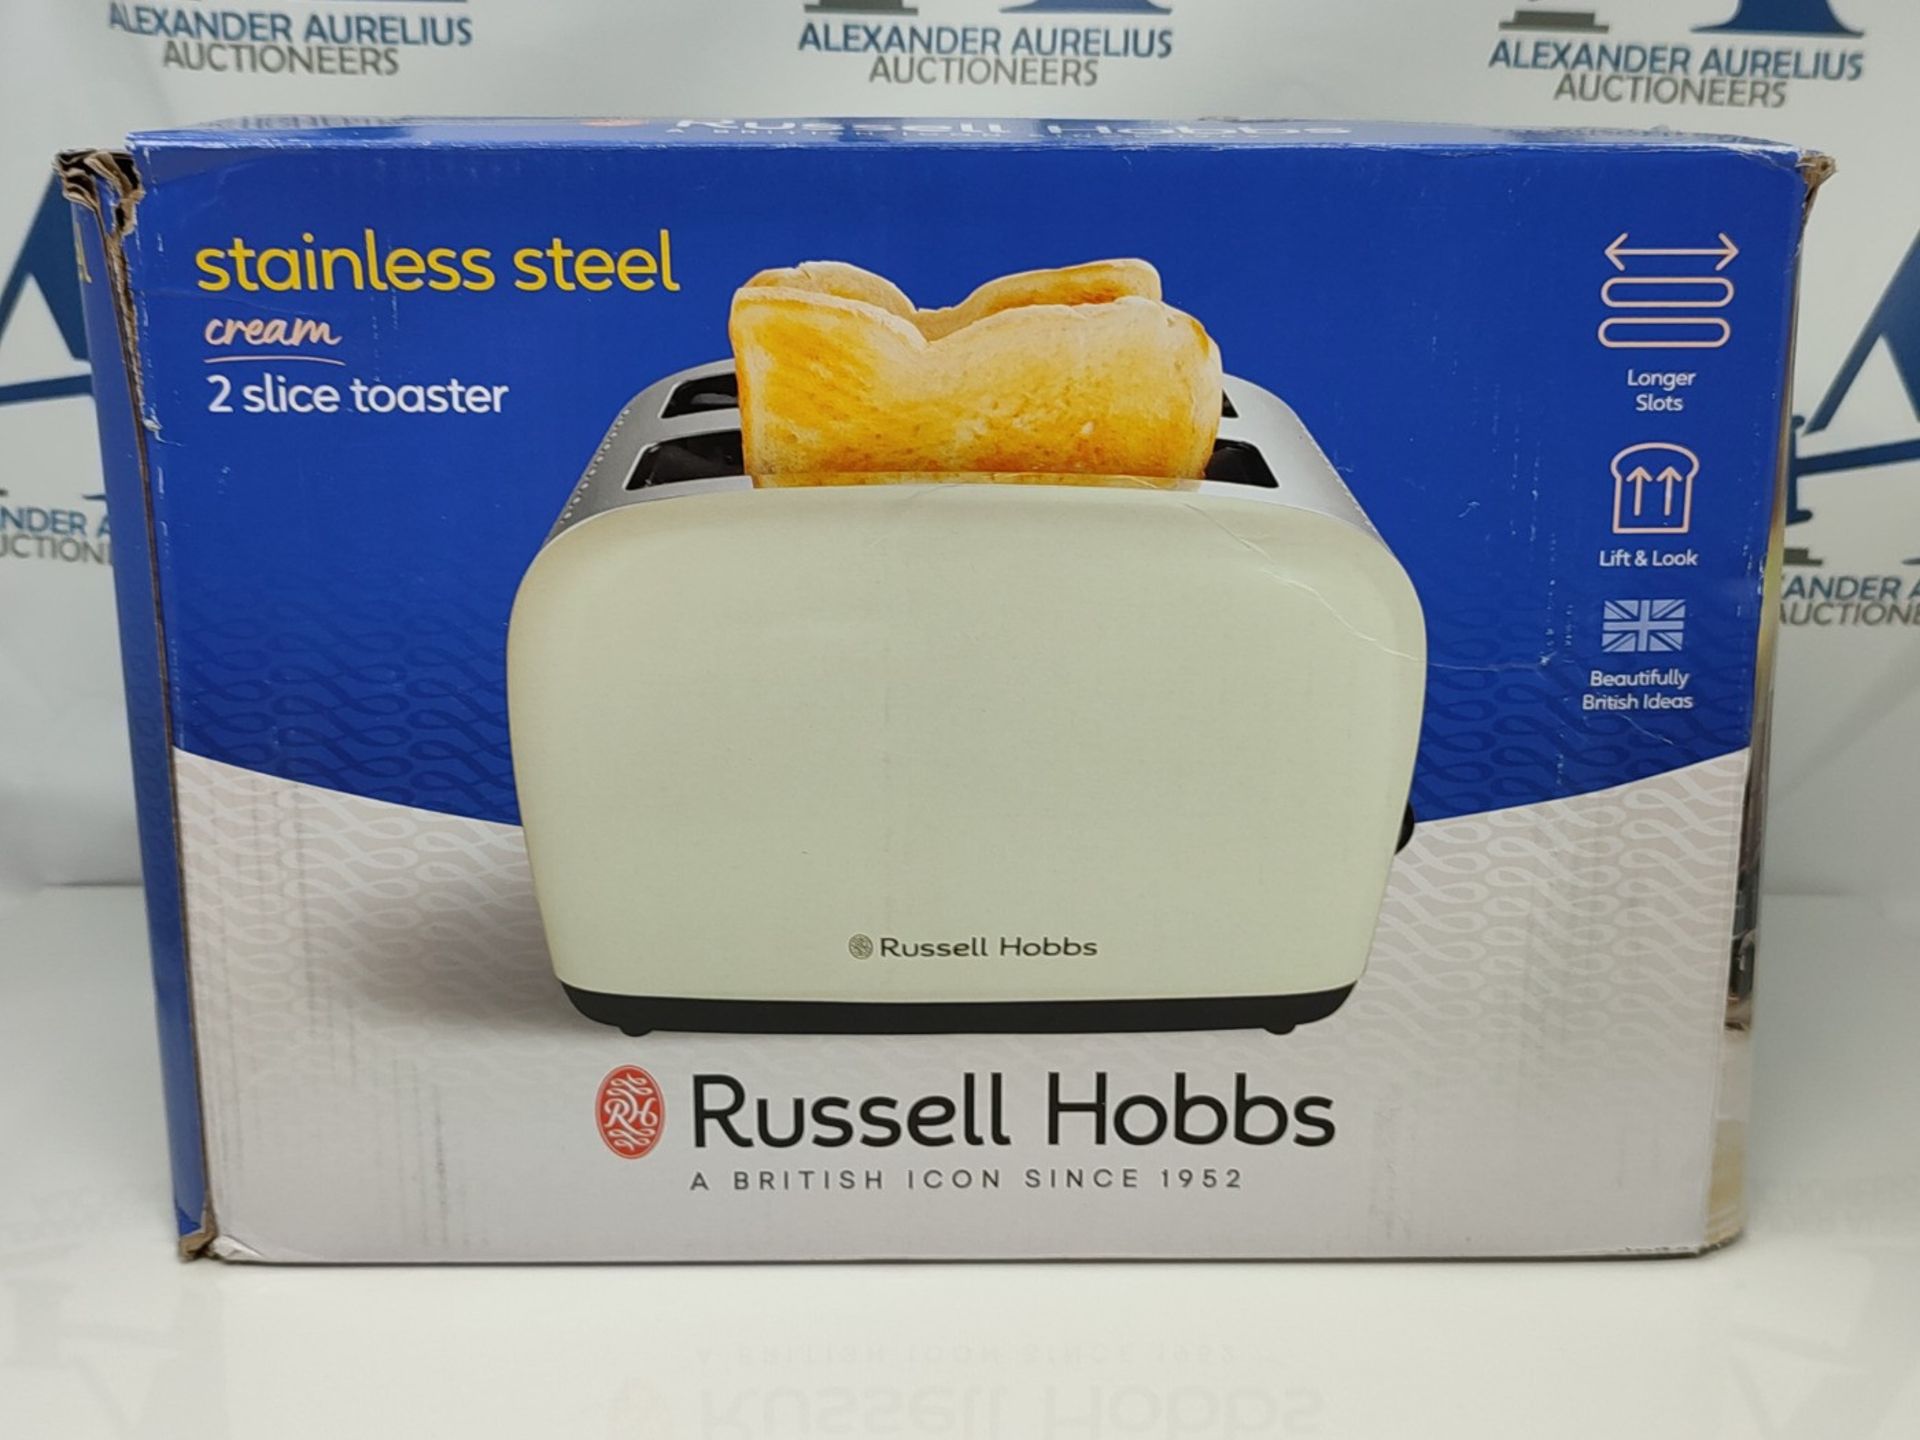 Russell Hobbs 26551 Stainless Steel 2 Slice Toaster, Cream - Image 2 of 3